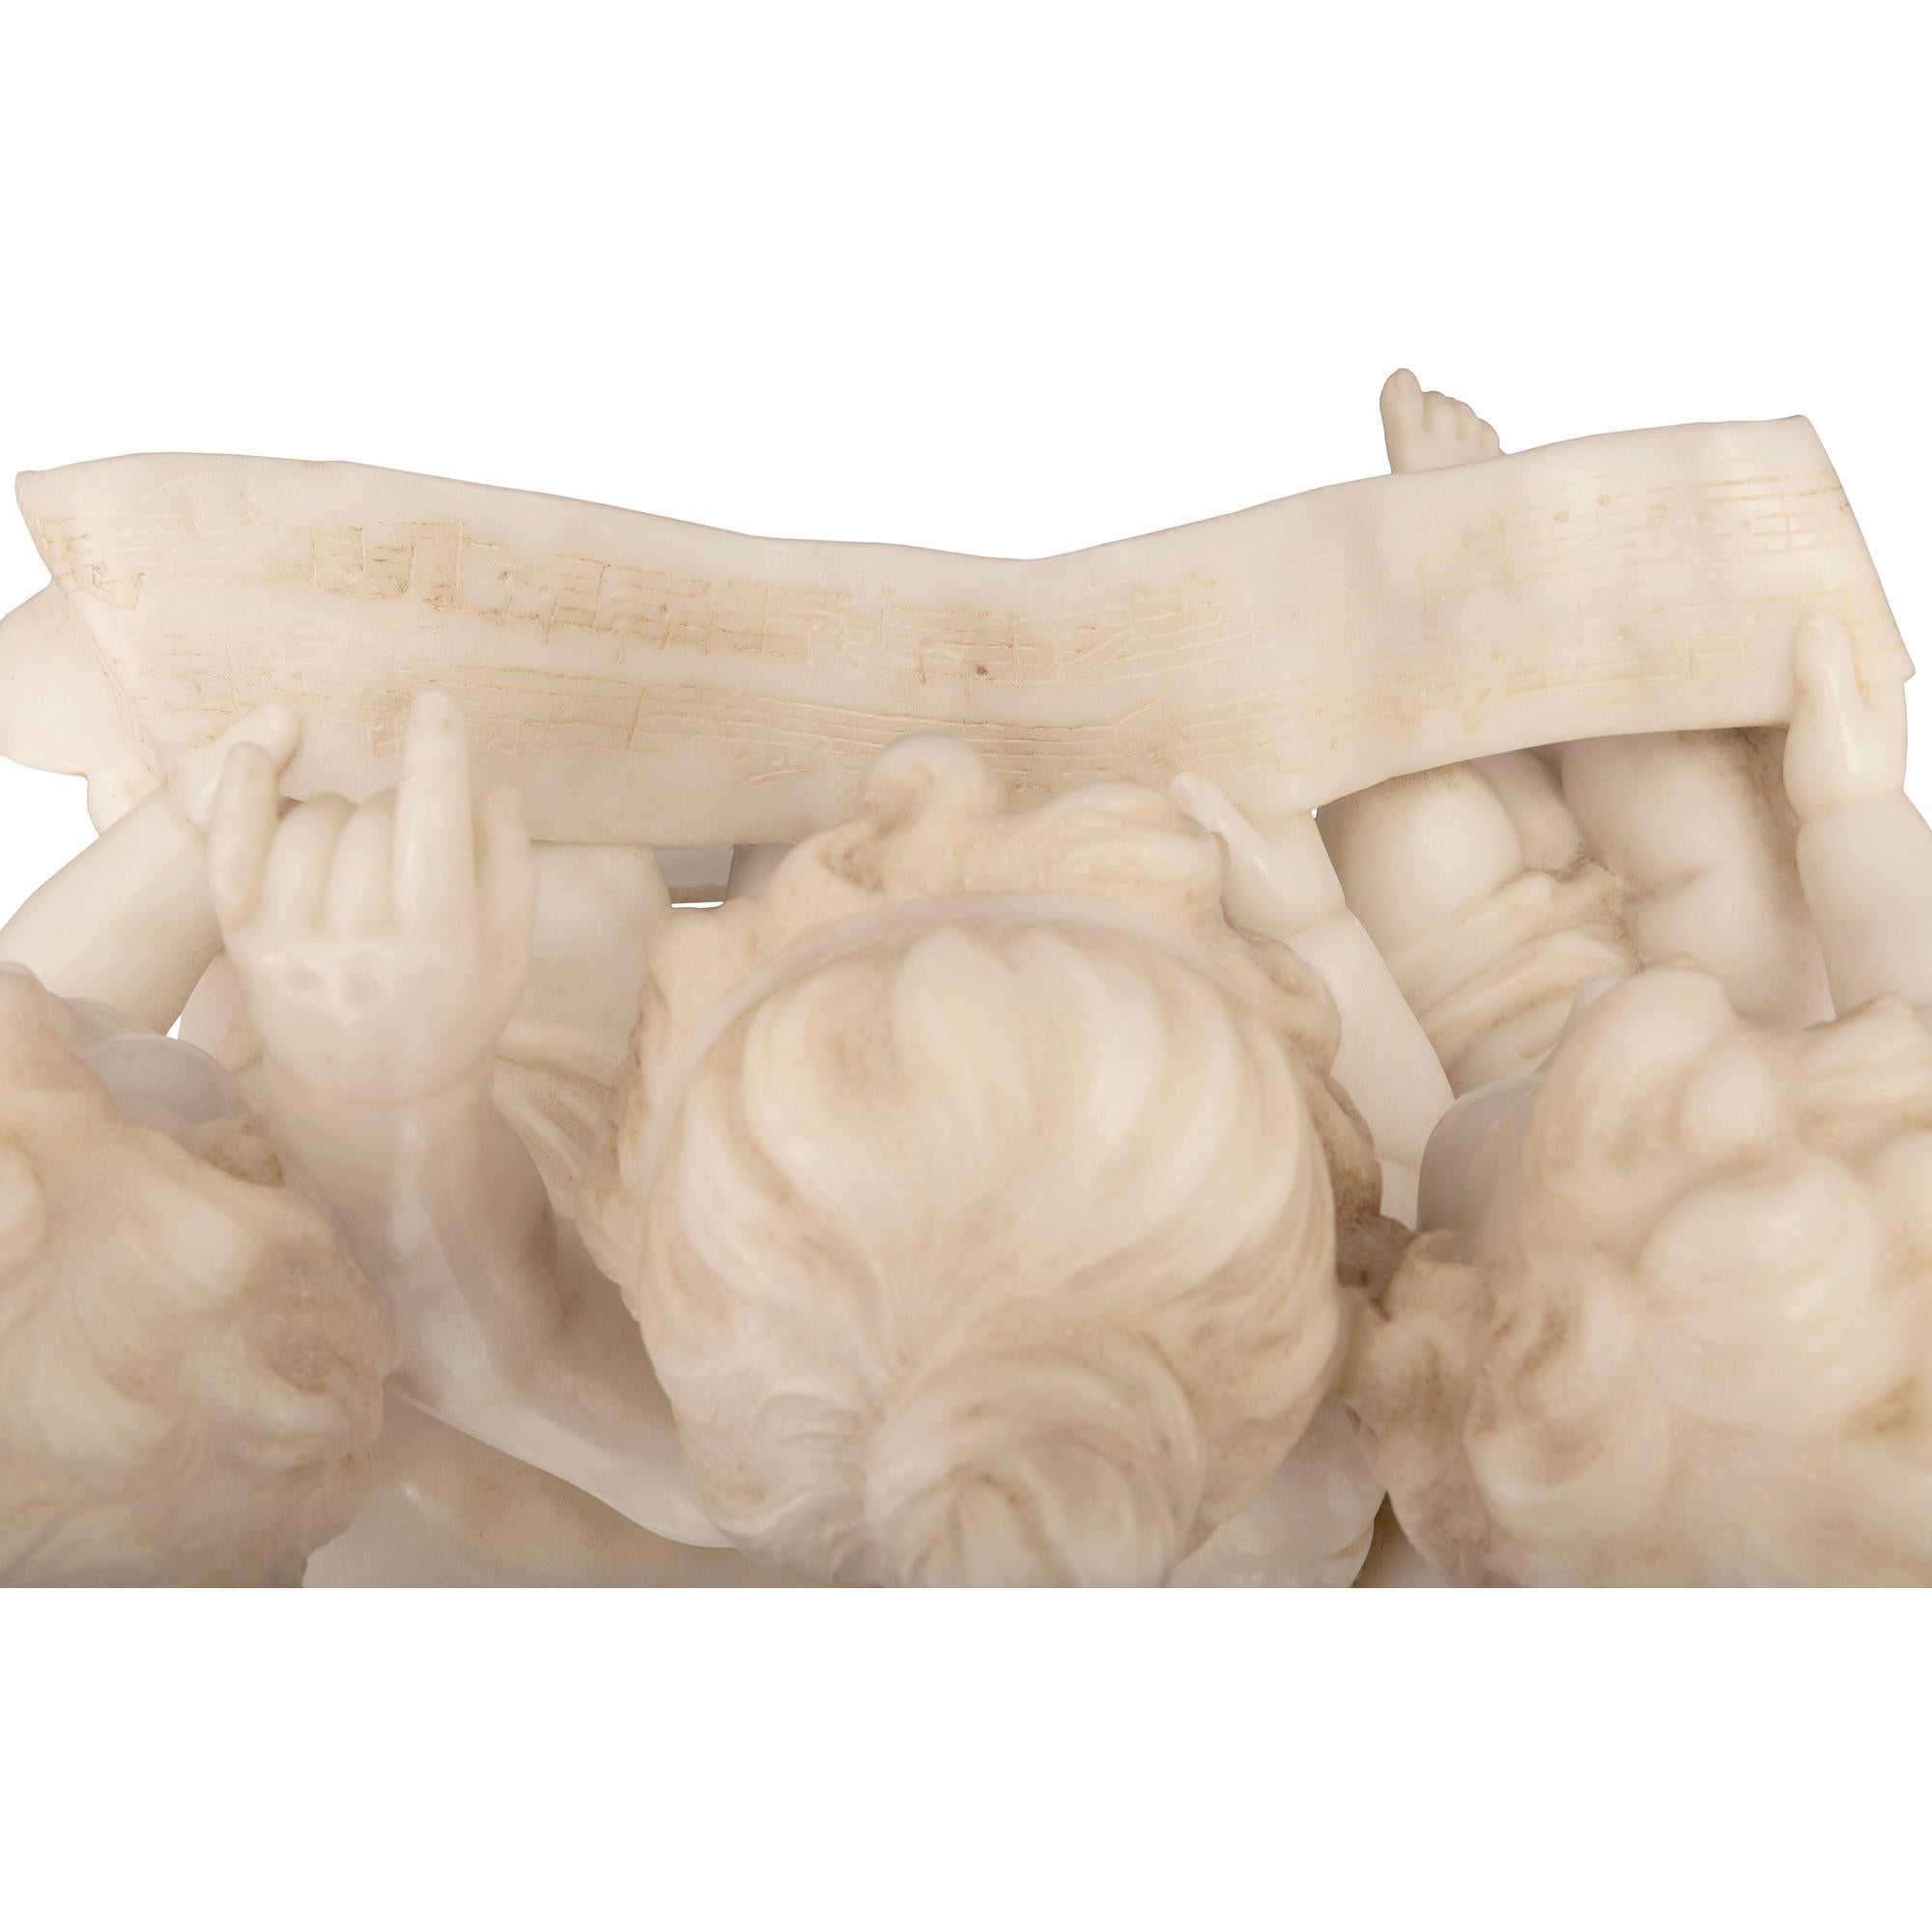 Italian 19th Century Verde Antico and White Carrara Marble Statue For Sale 3